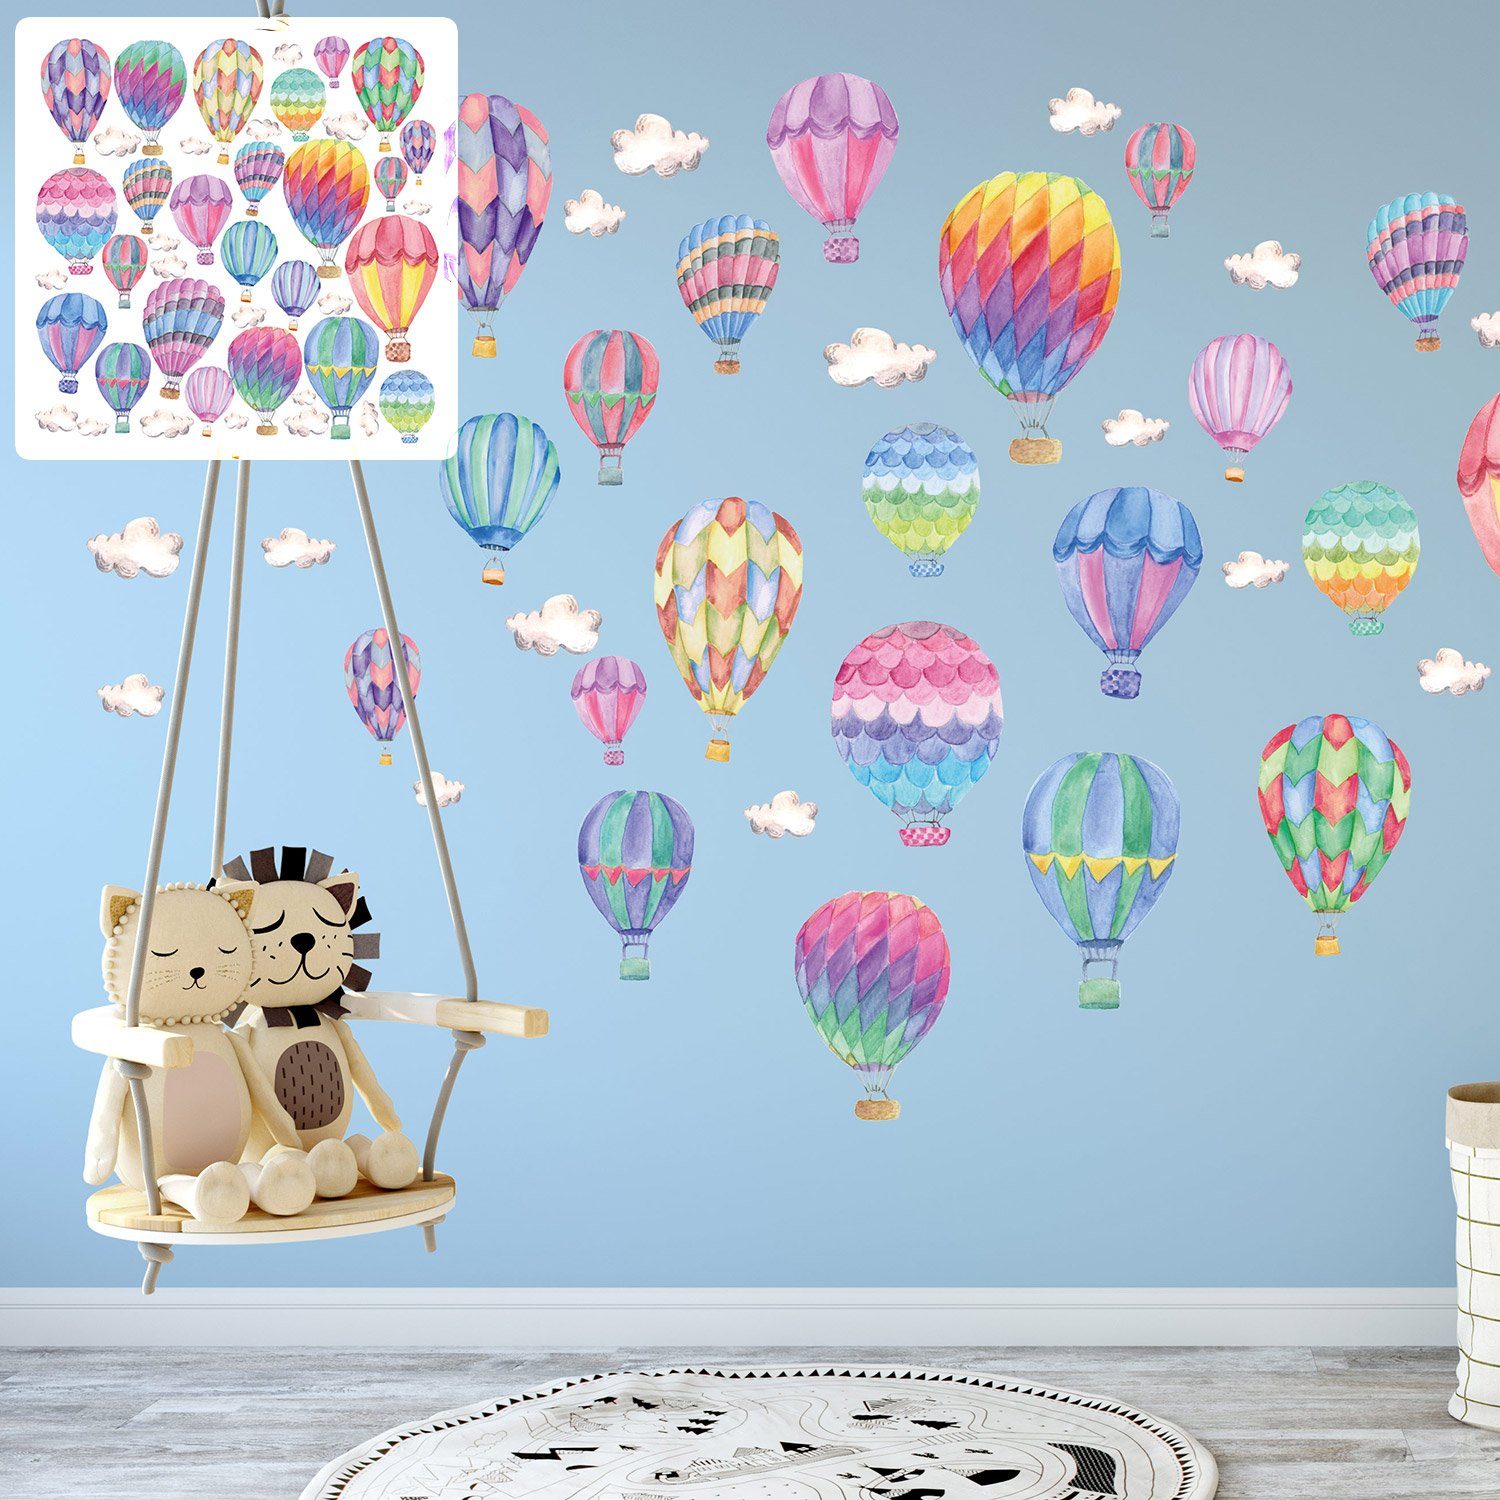 Sunnywall Wandtattoo »XXL Wandtattoo Heißluftballon Ballons Set  verschiedene Motive Kinderzimmer Aufkleber bunt Wanddeko« online kaufen |  OTTO